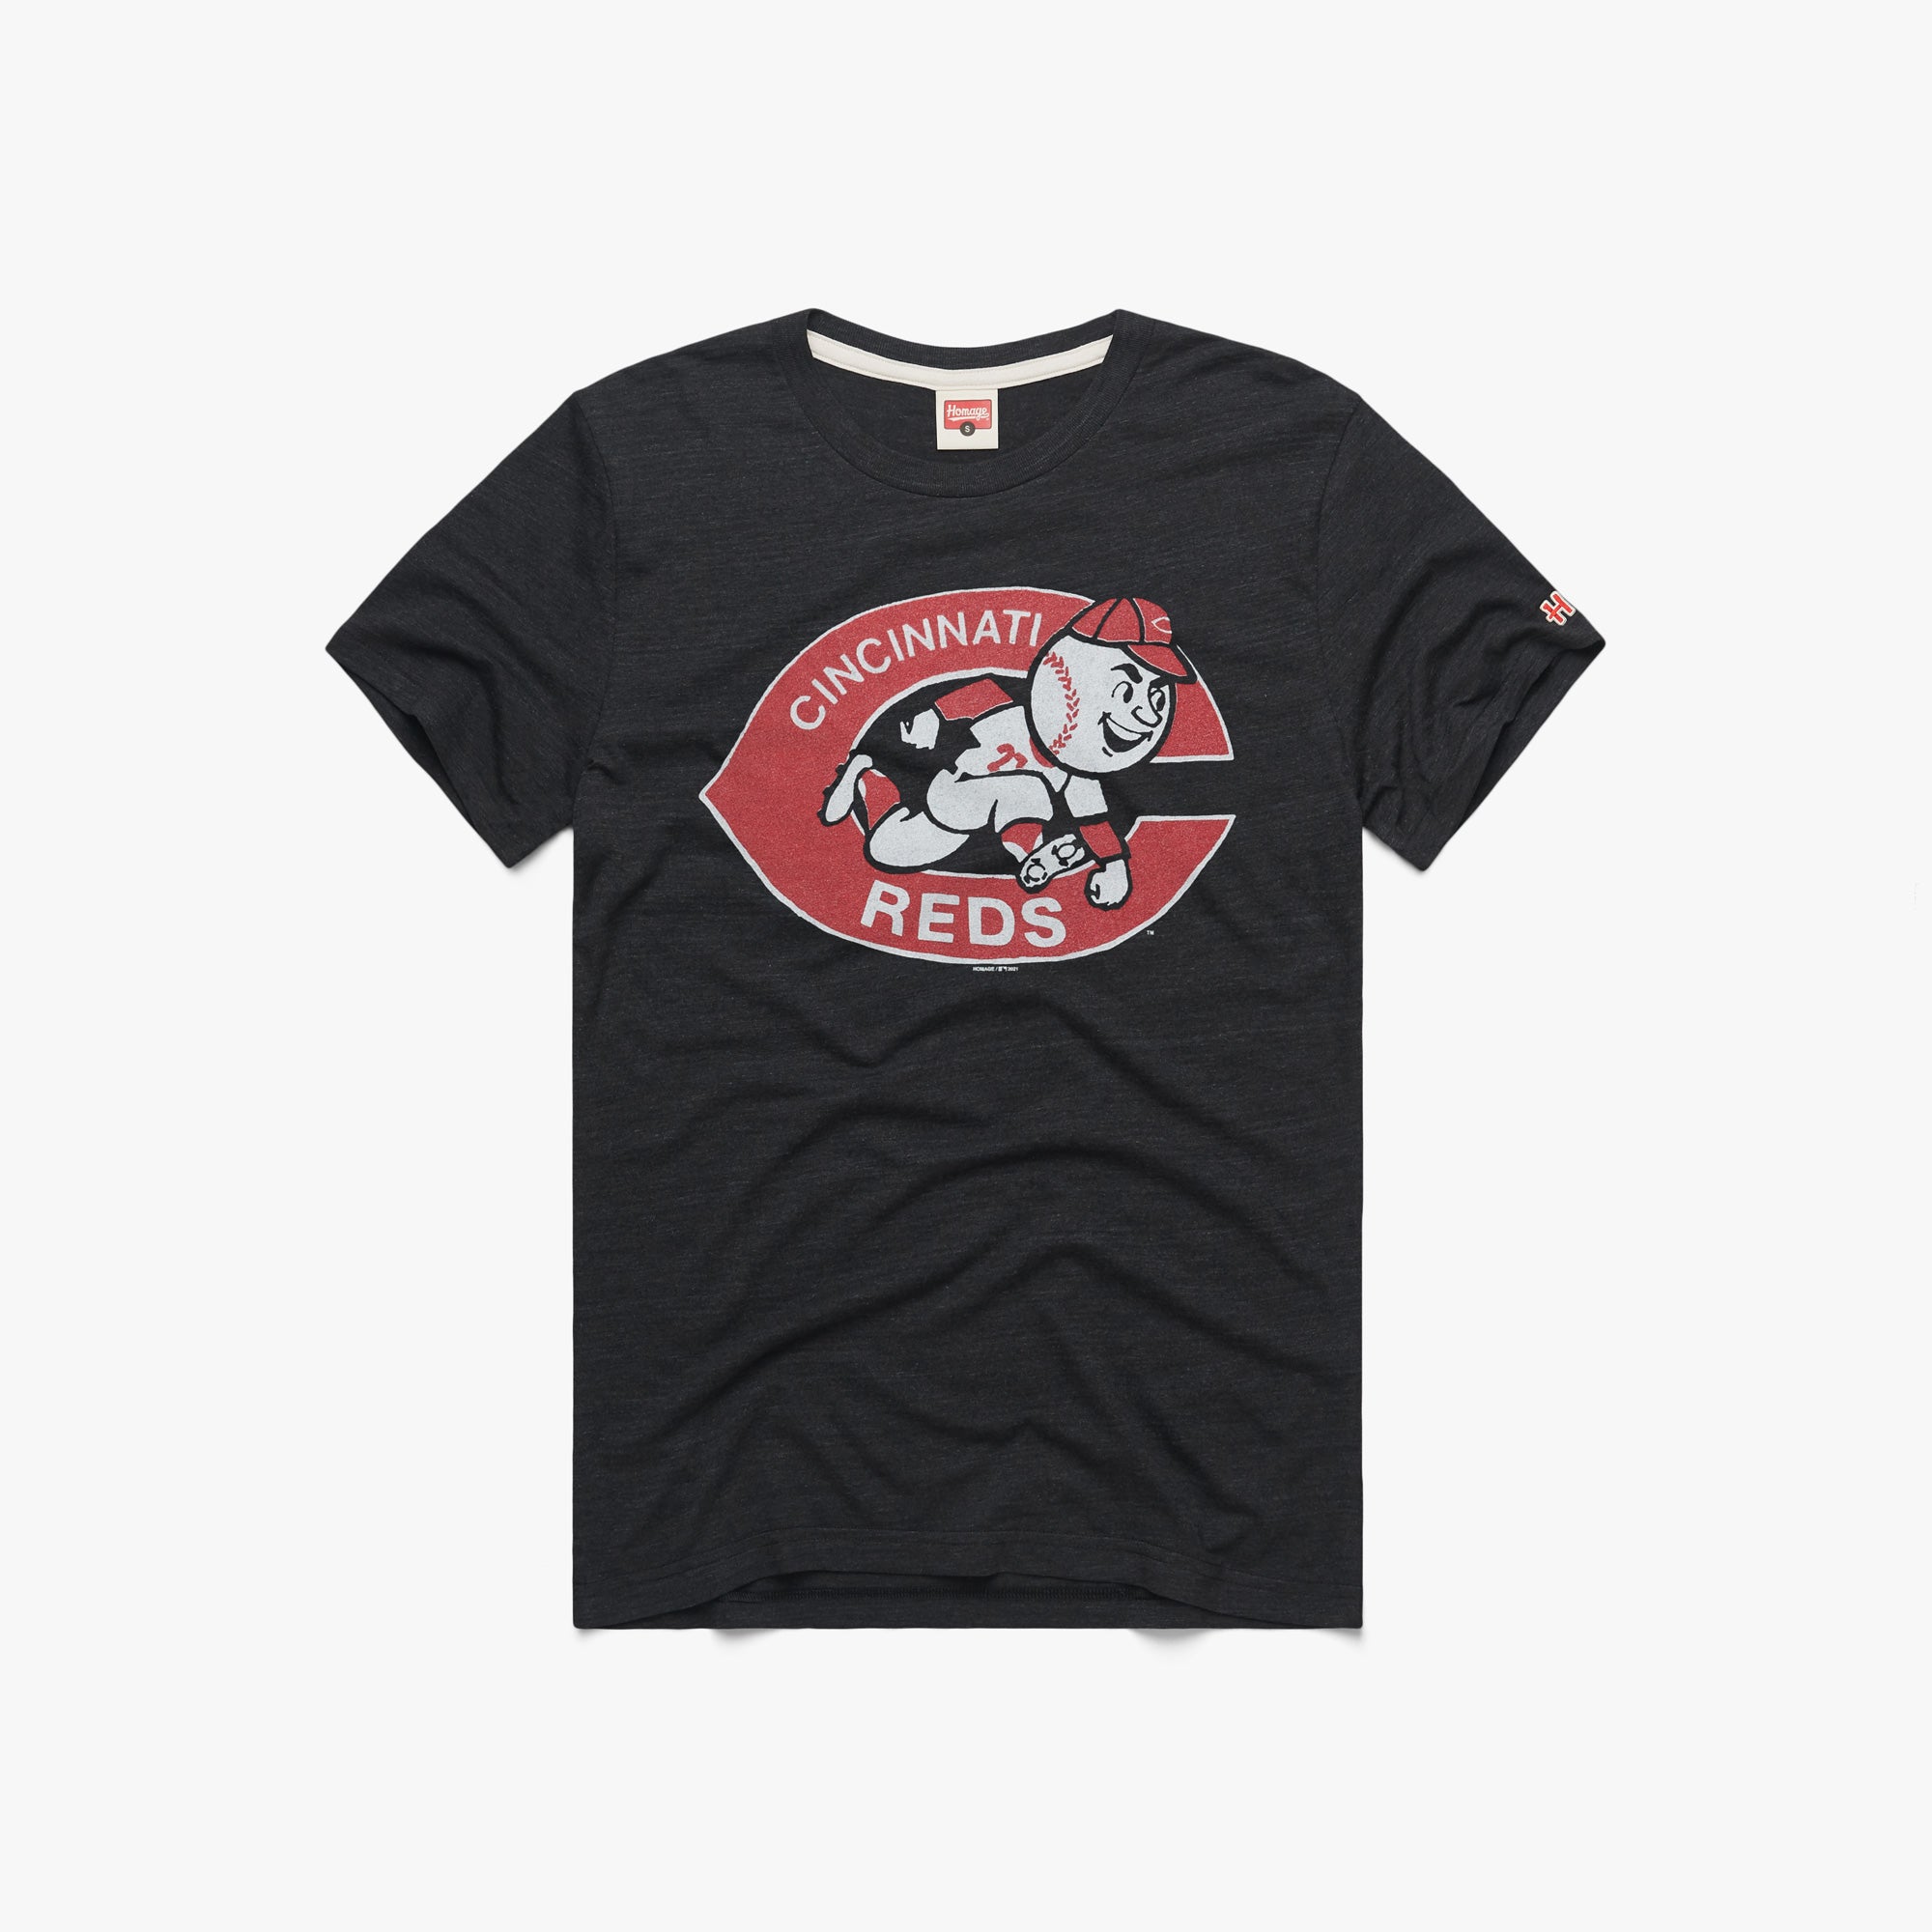 Vintage 90's Cincinnati Reds graphic tee, National League baseball shirt,  size XL